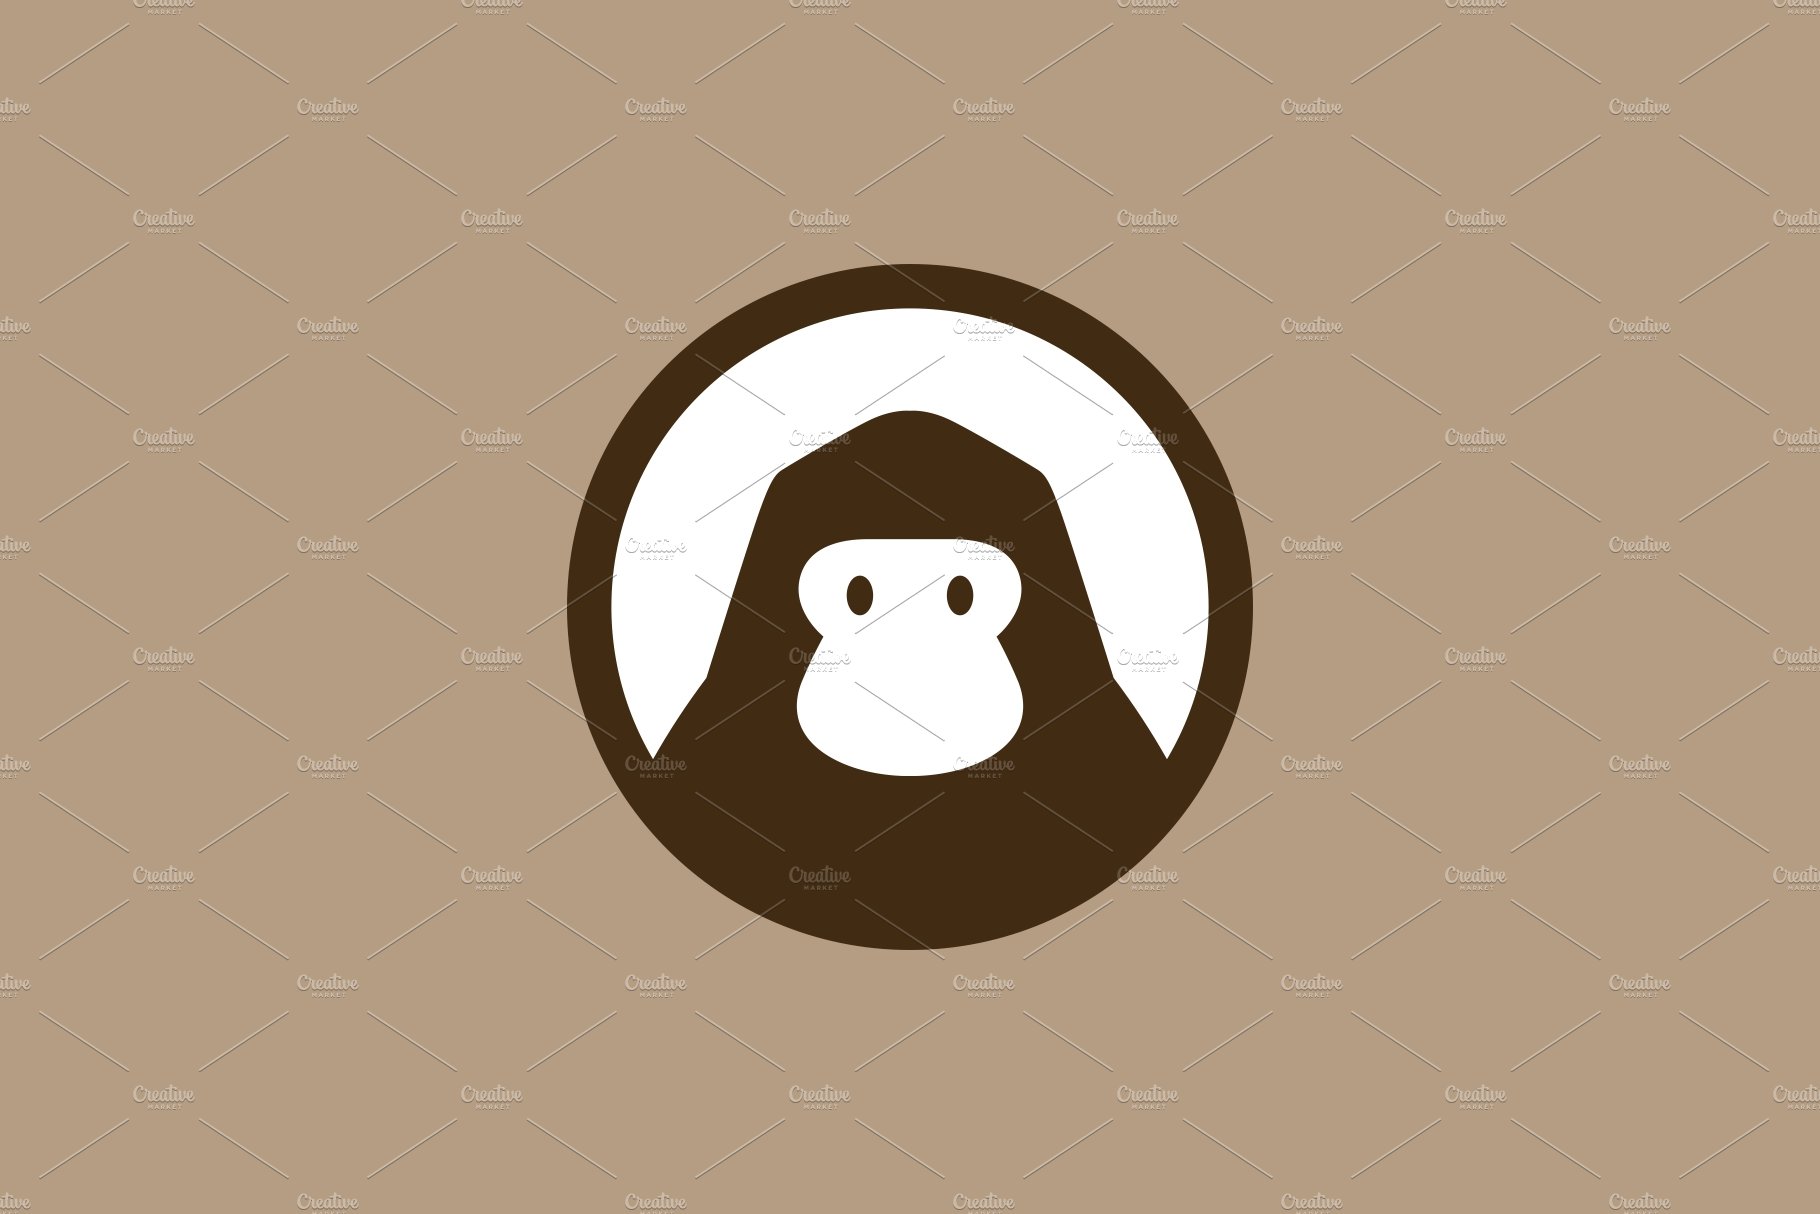 gorilla in round emblem logo vector cover image.